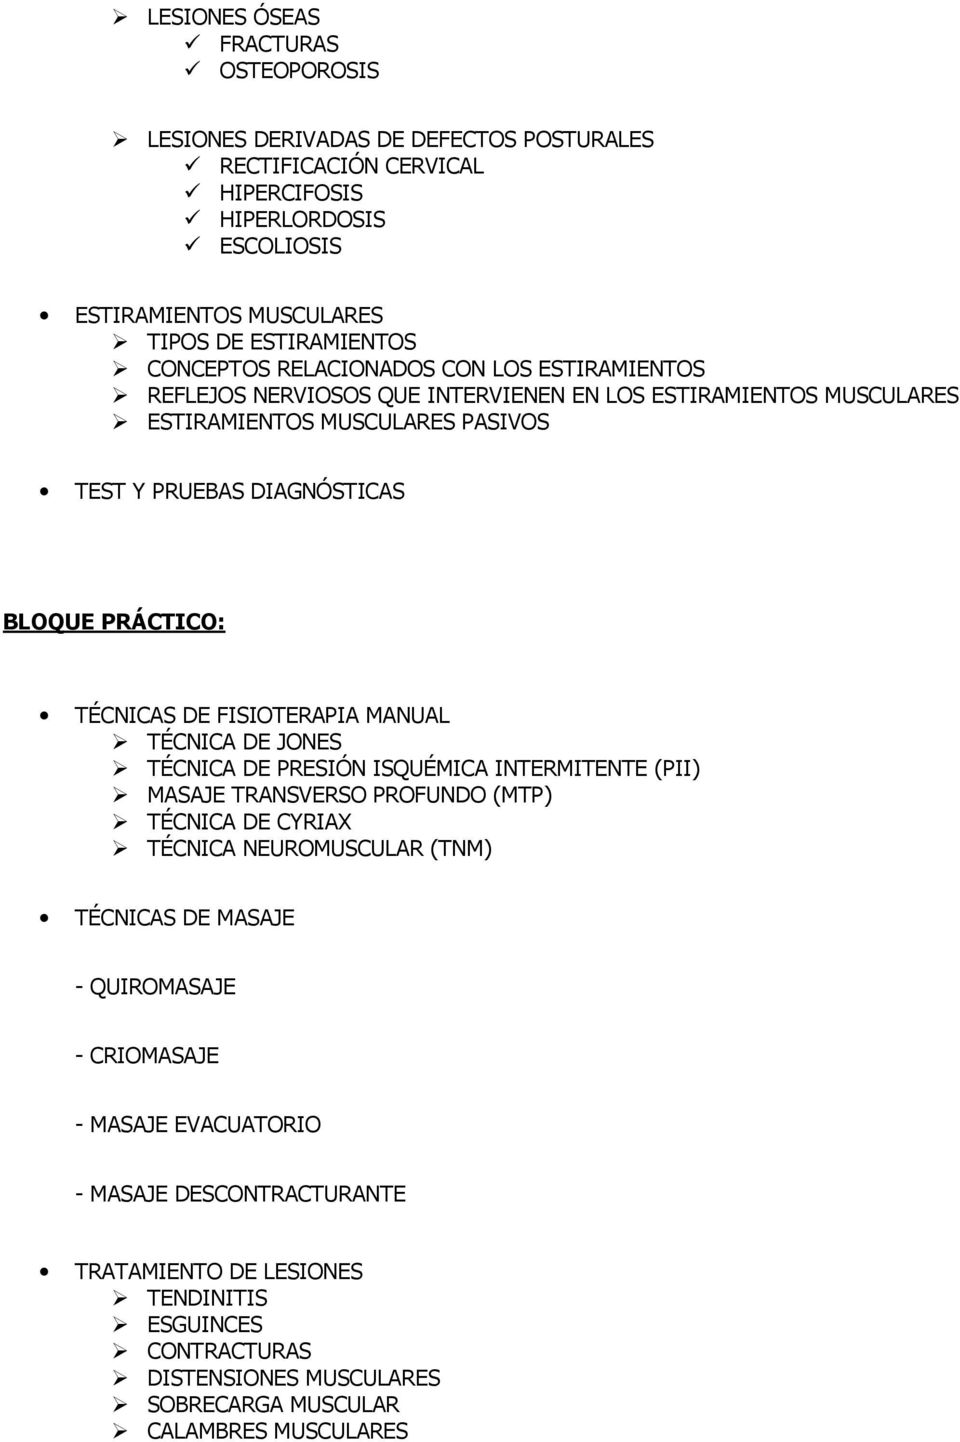 TÉCNICAS DE FISIOTERAPIA MANUAL TÉCNICA DE JONES TÉCNICA DE PRESIÓN ISQUÉMICA INTERMITENTE (PII) MASAJE TRANSVERSO PROFUNDO (MTP) TÉCNICA DE CYRIAX TÉCNICA NEUROMUSCULAR (TNM) TÉCNICAS DE